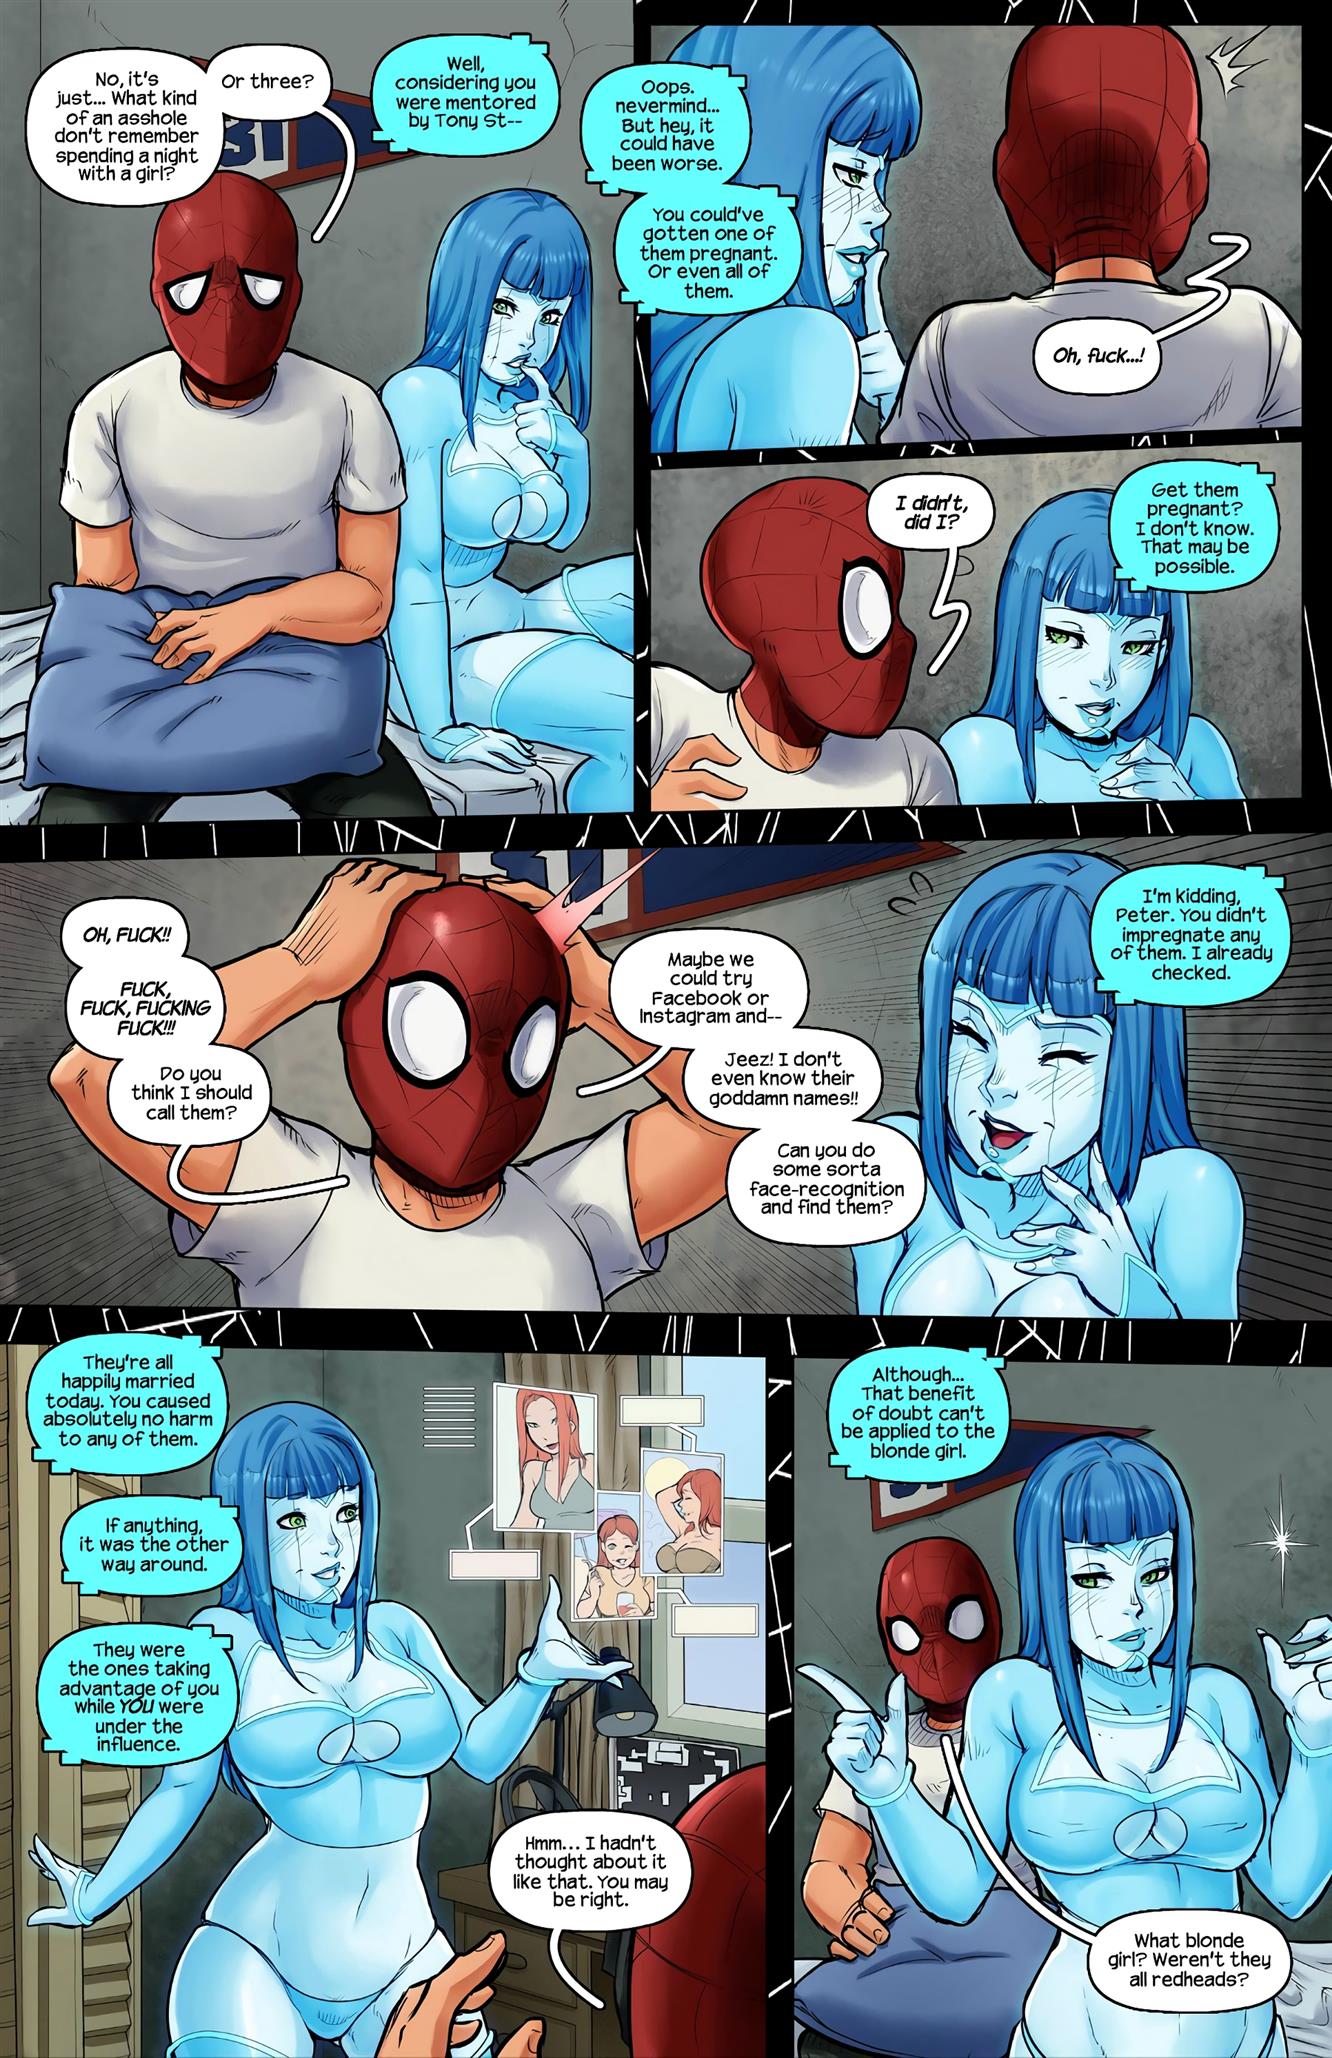 Haptics Protocol 2 (Spider-Man) [Tracy Scops]